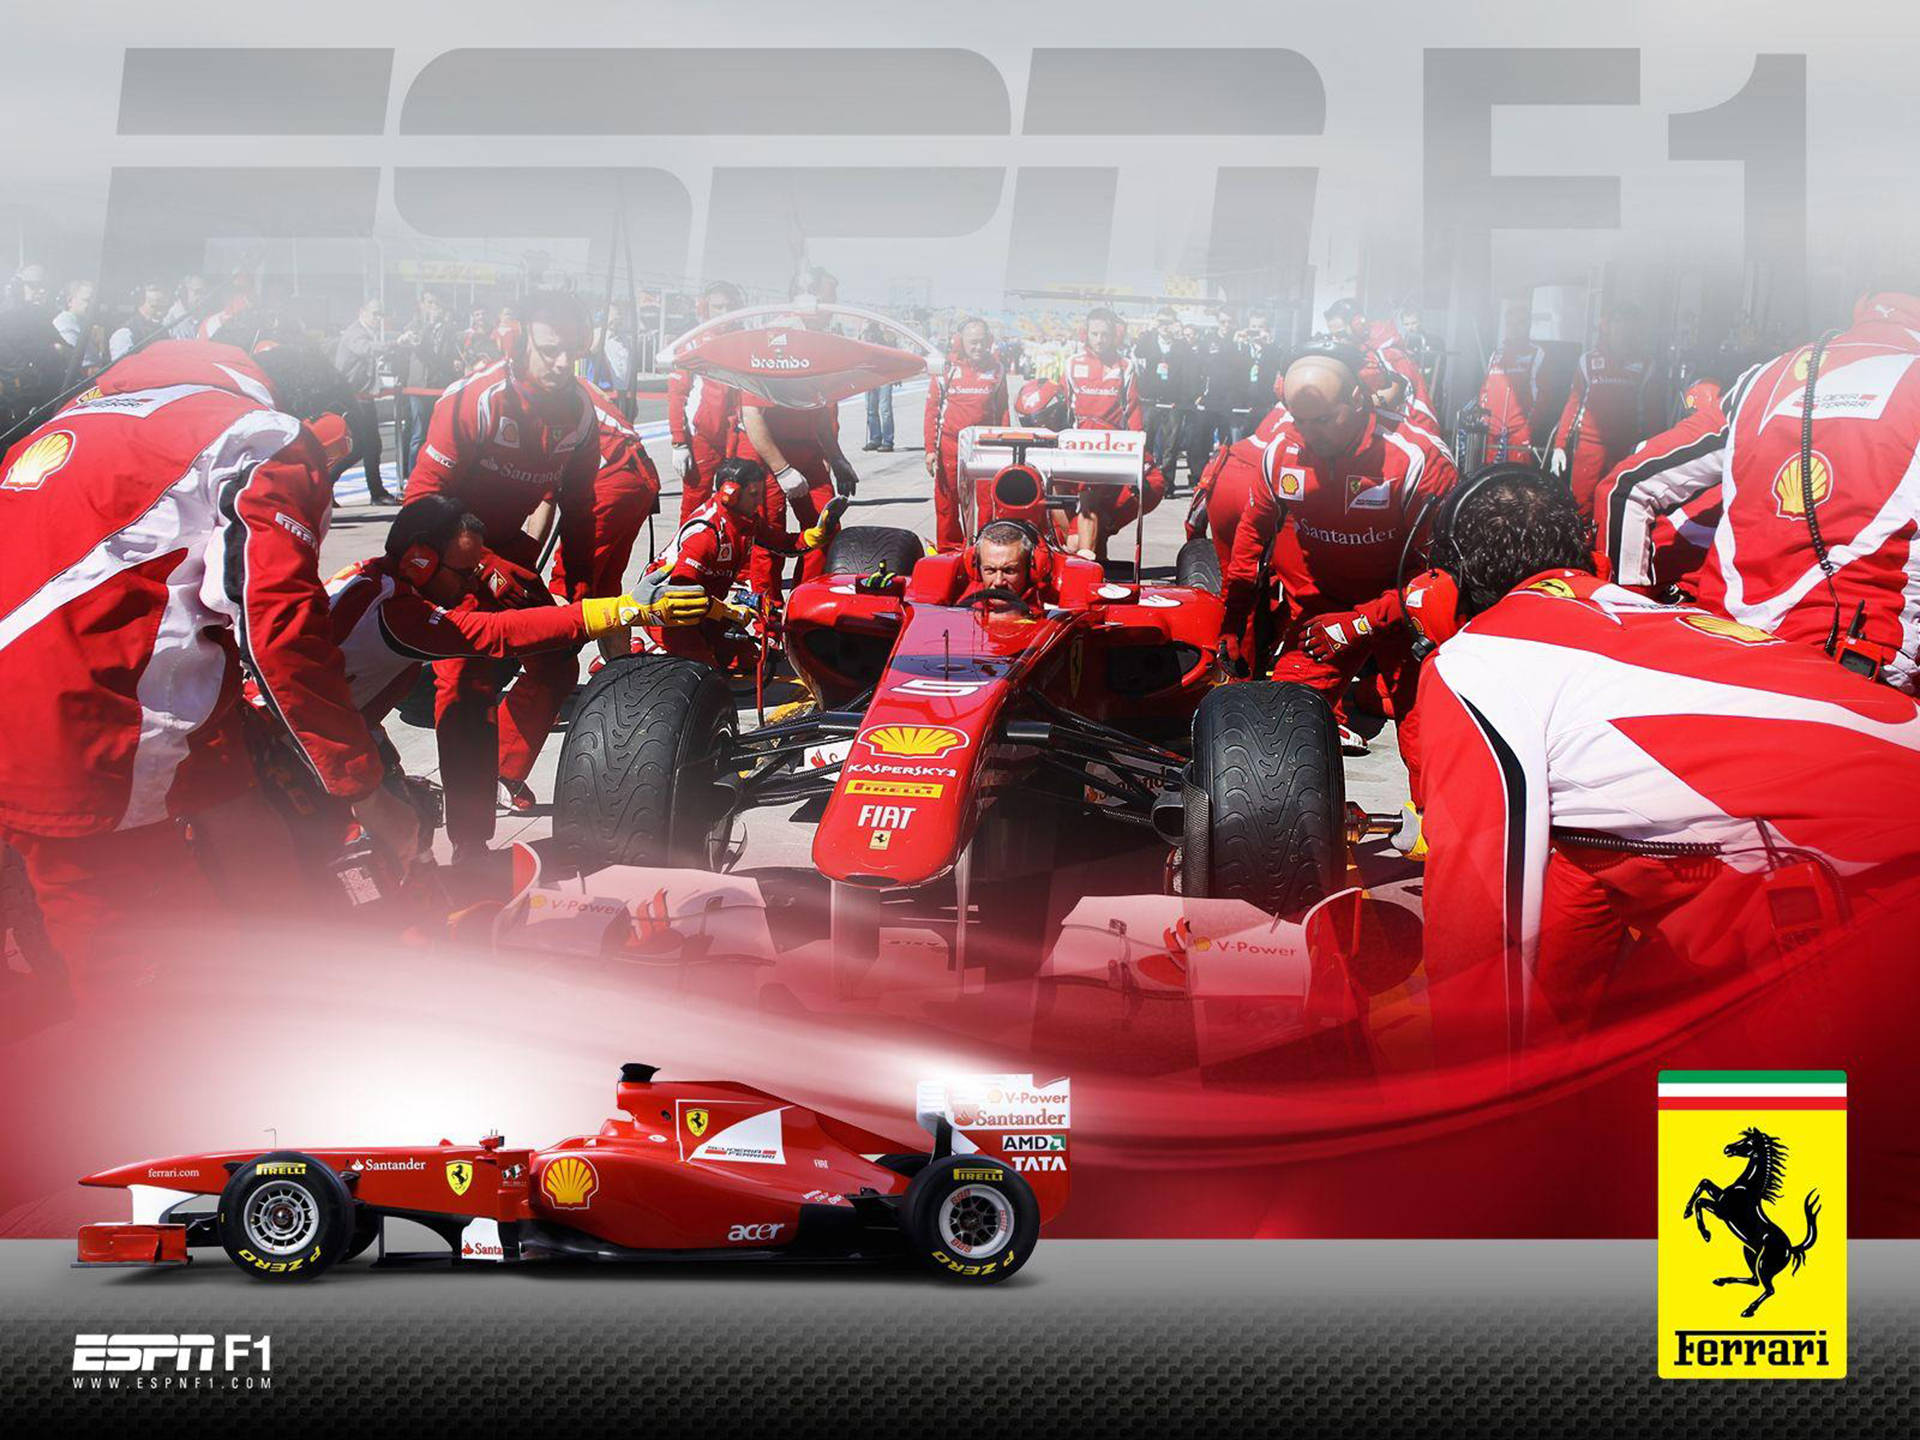 ESPN F1 Ferrari Team Wallpaper